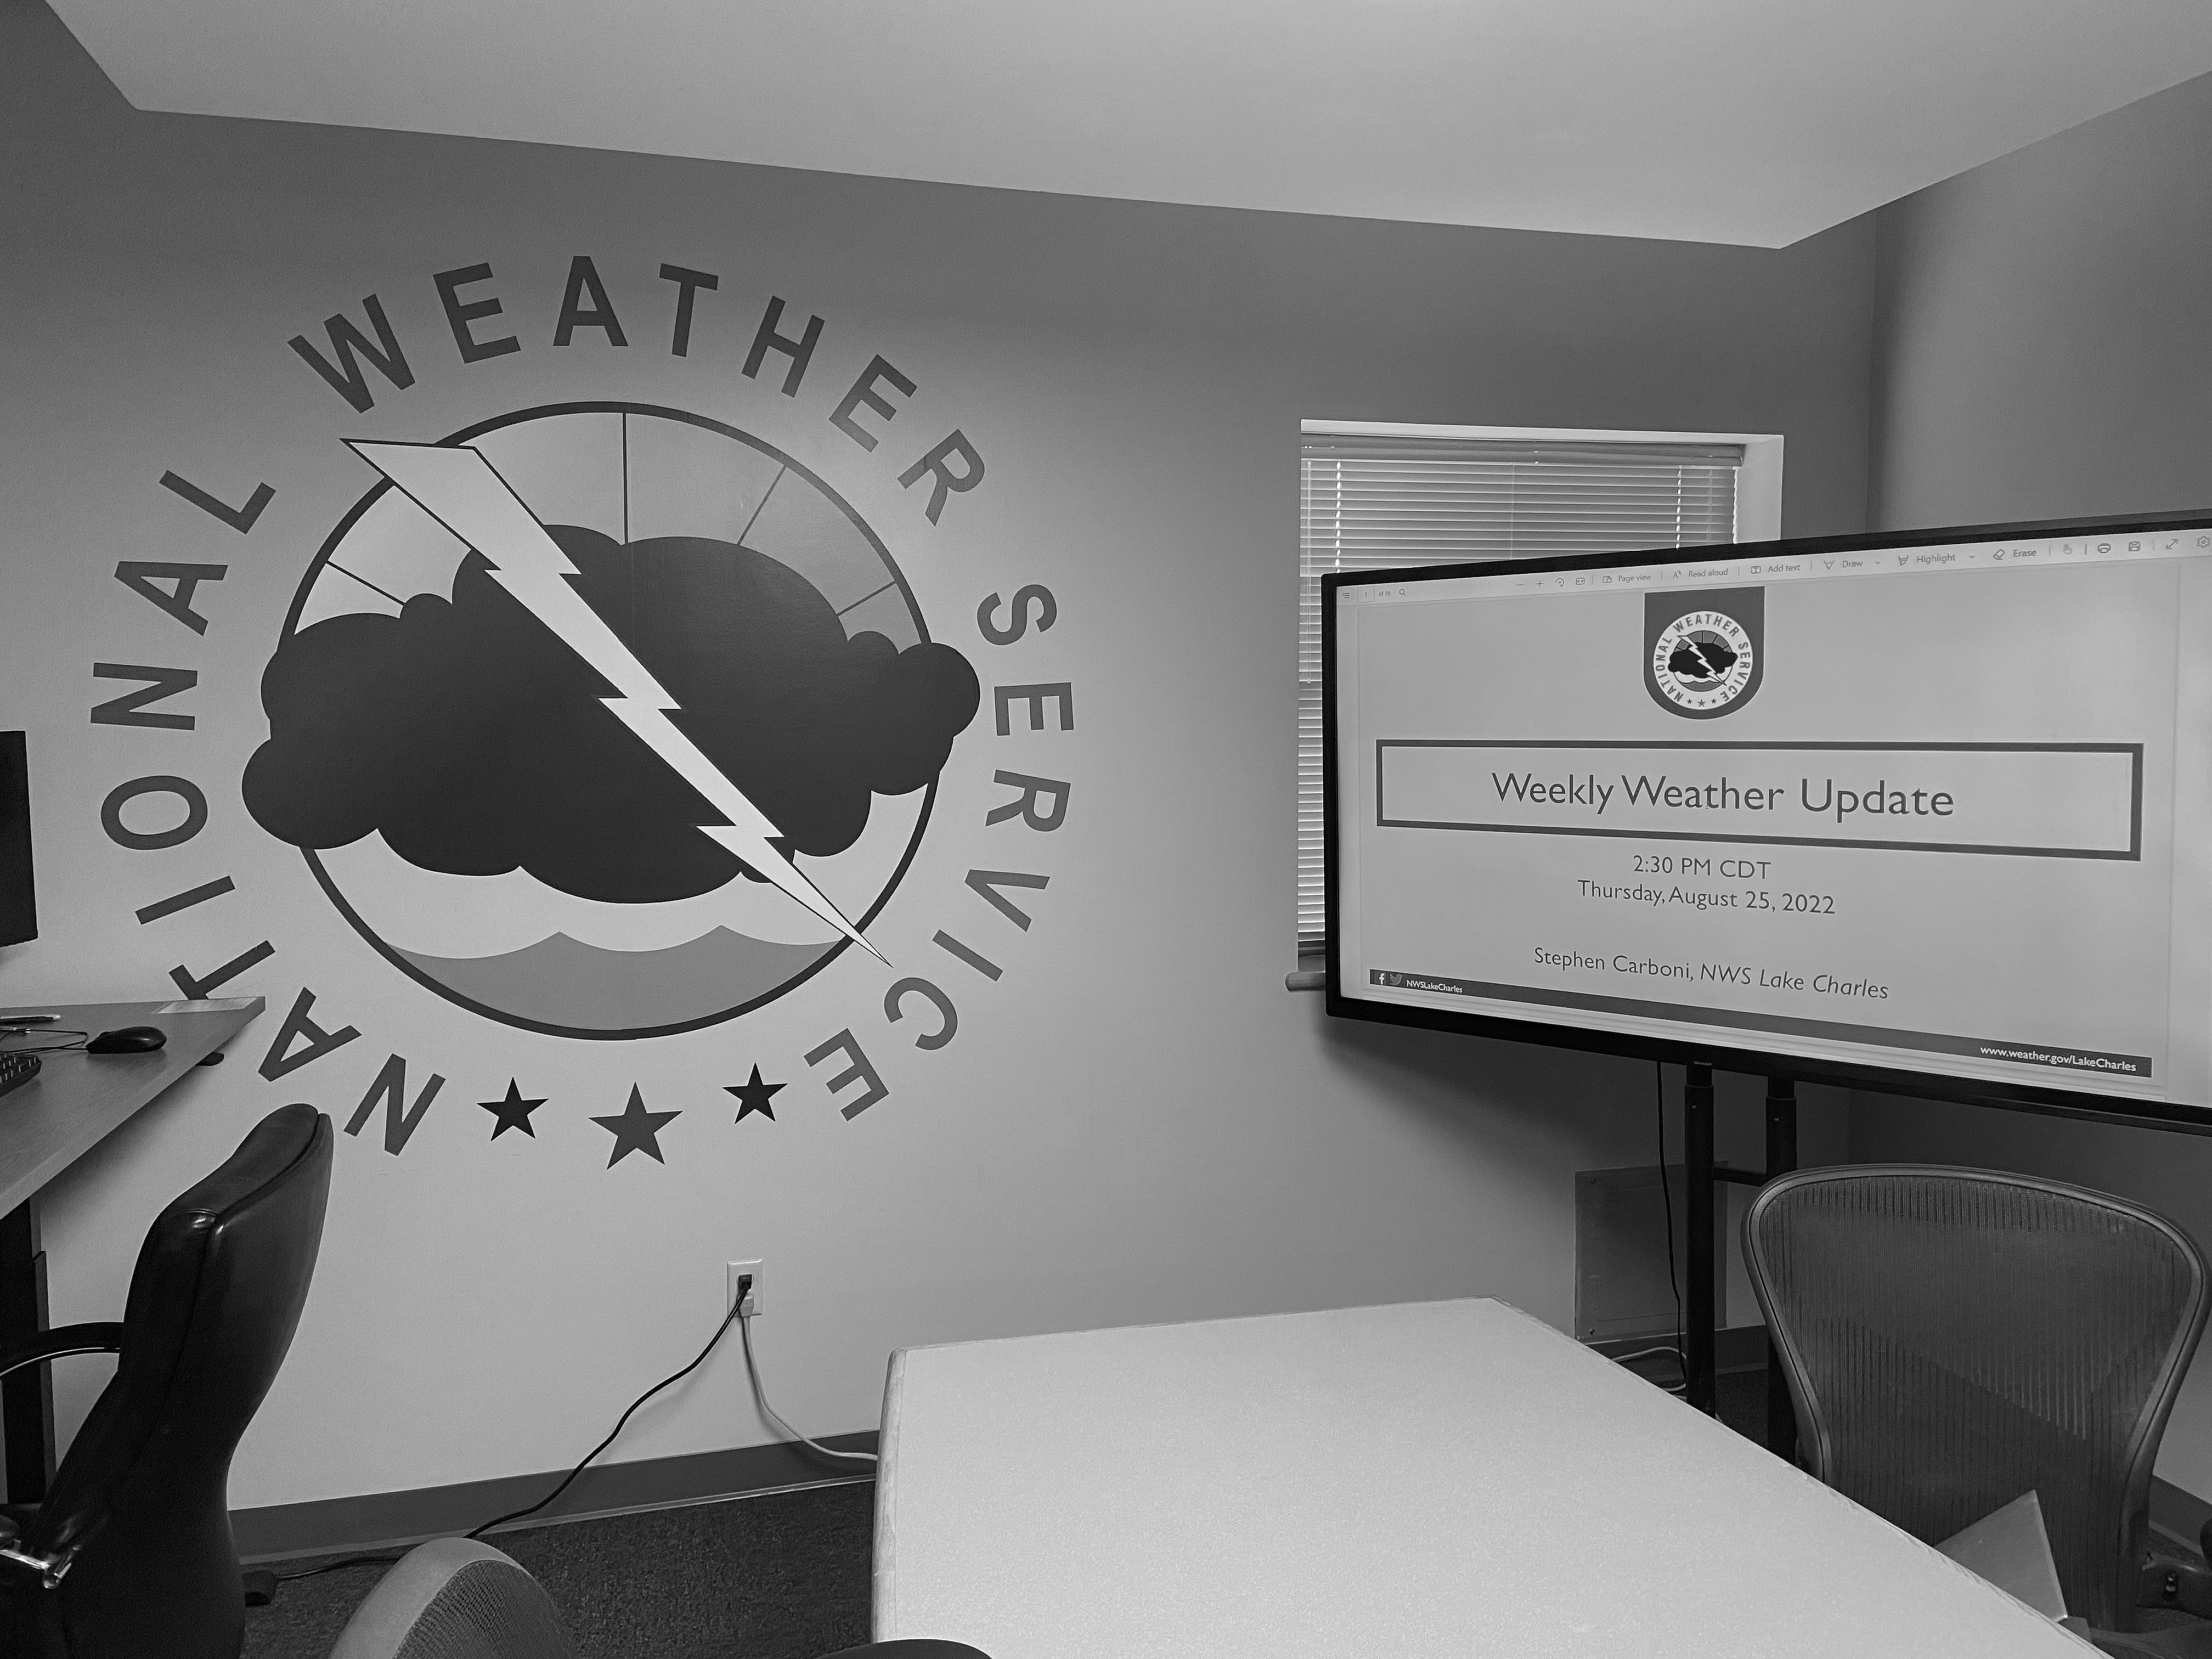 Image of NWS logo + big screen showing briefing